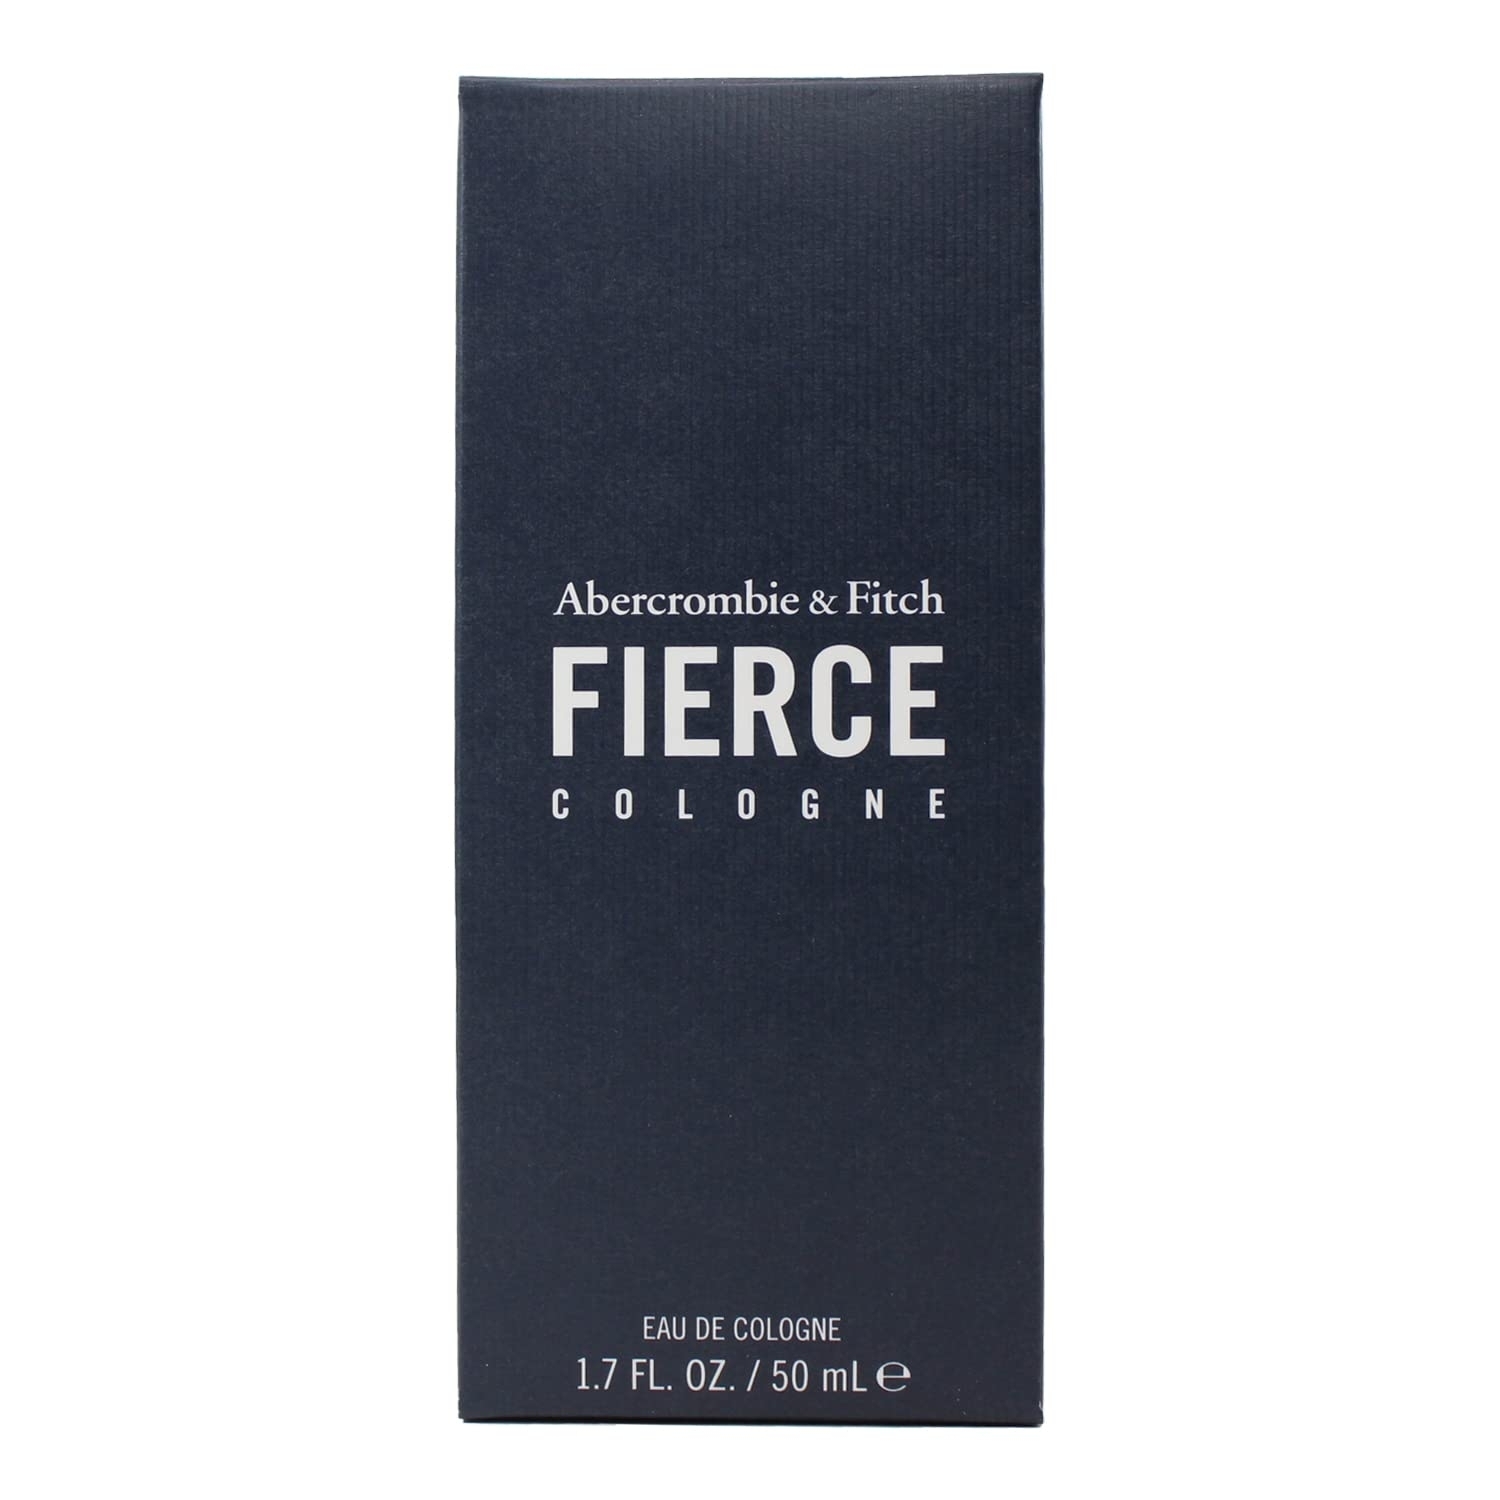 Fierce By Abercrombie & Fitch 1.7fl Oz Cologne Spray